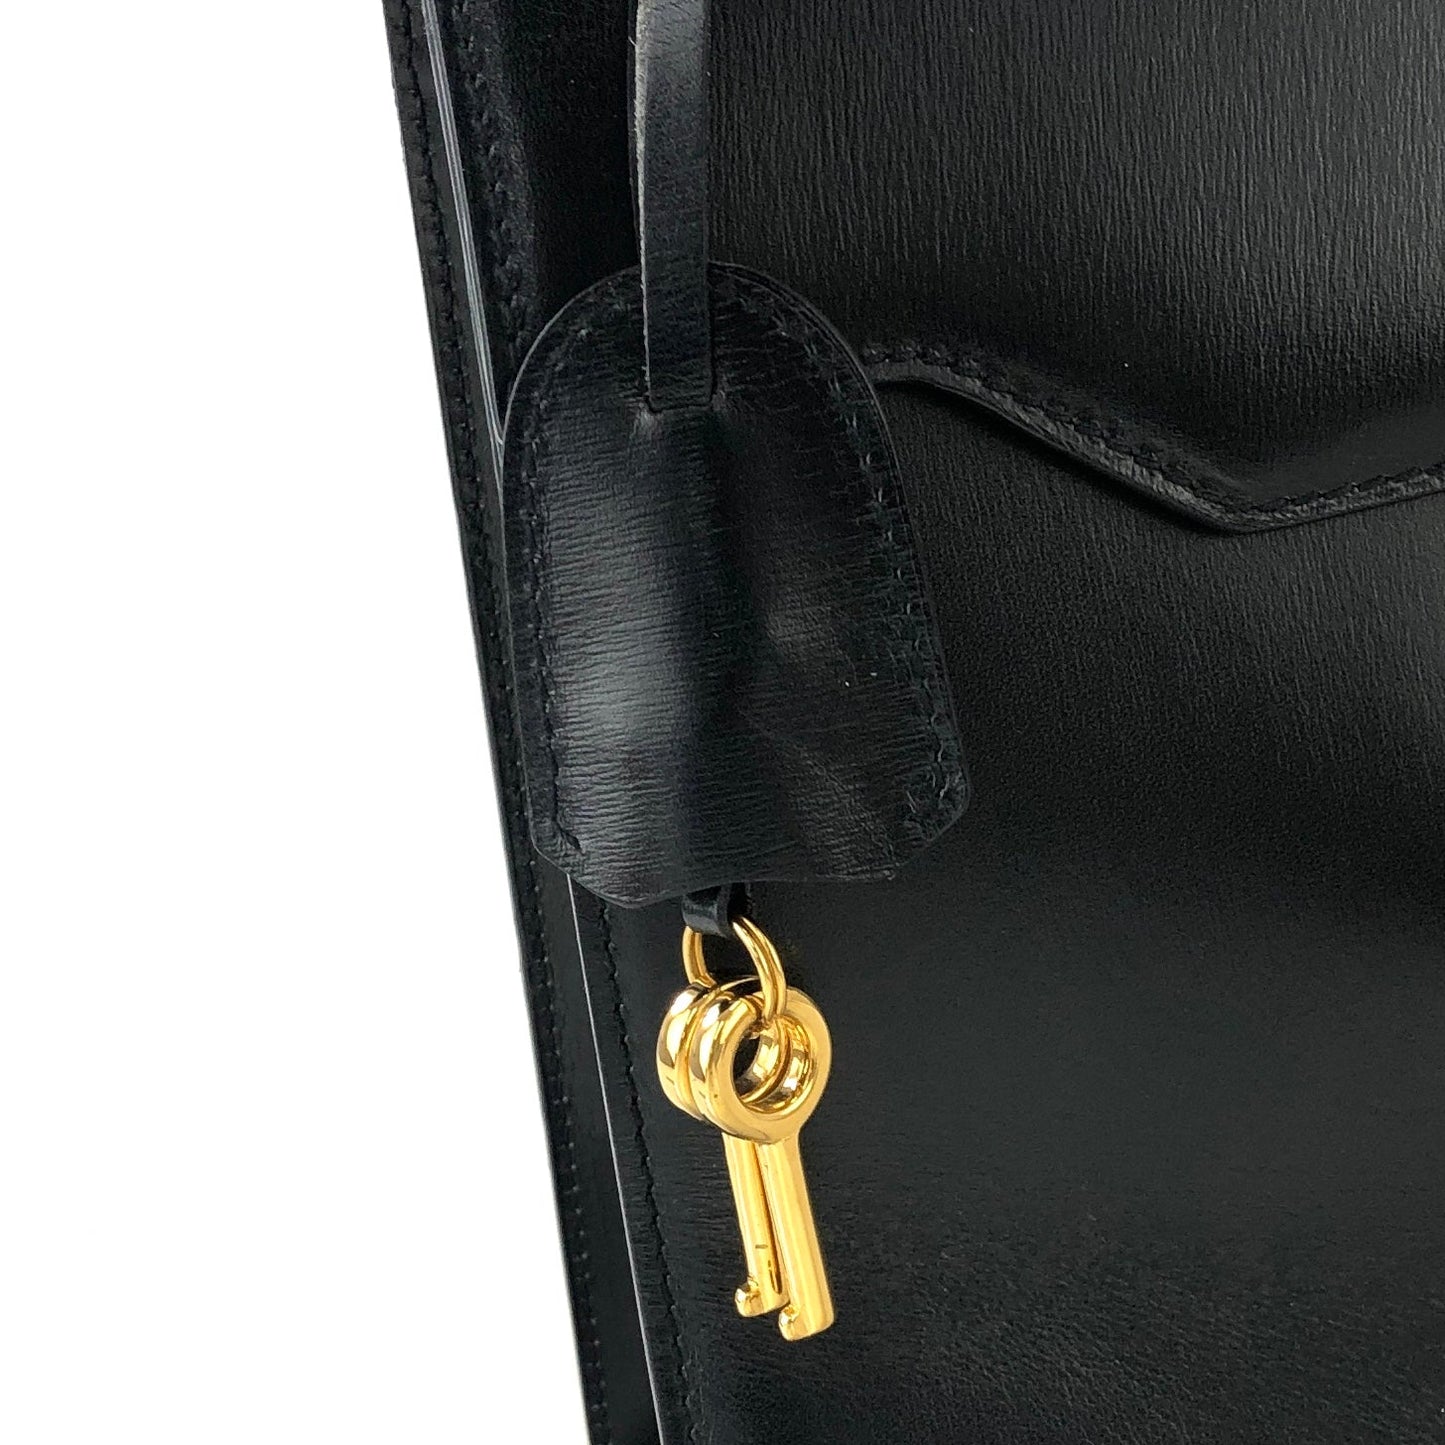 GUCCI Lady lock Top handle Leather Handbag Navy Old gucci Vintage ubd4ck